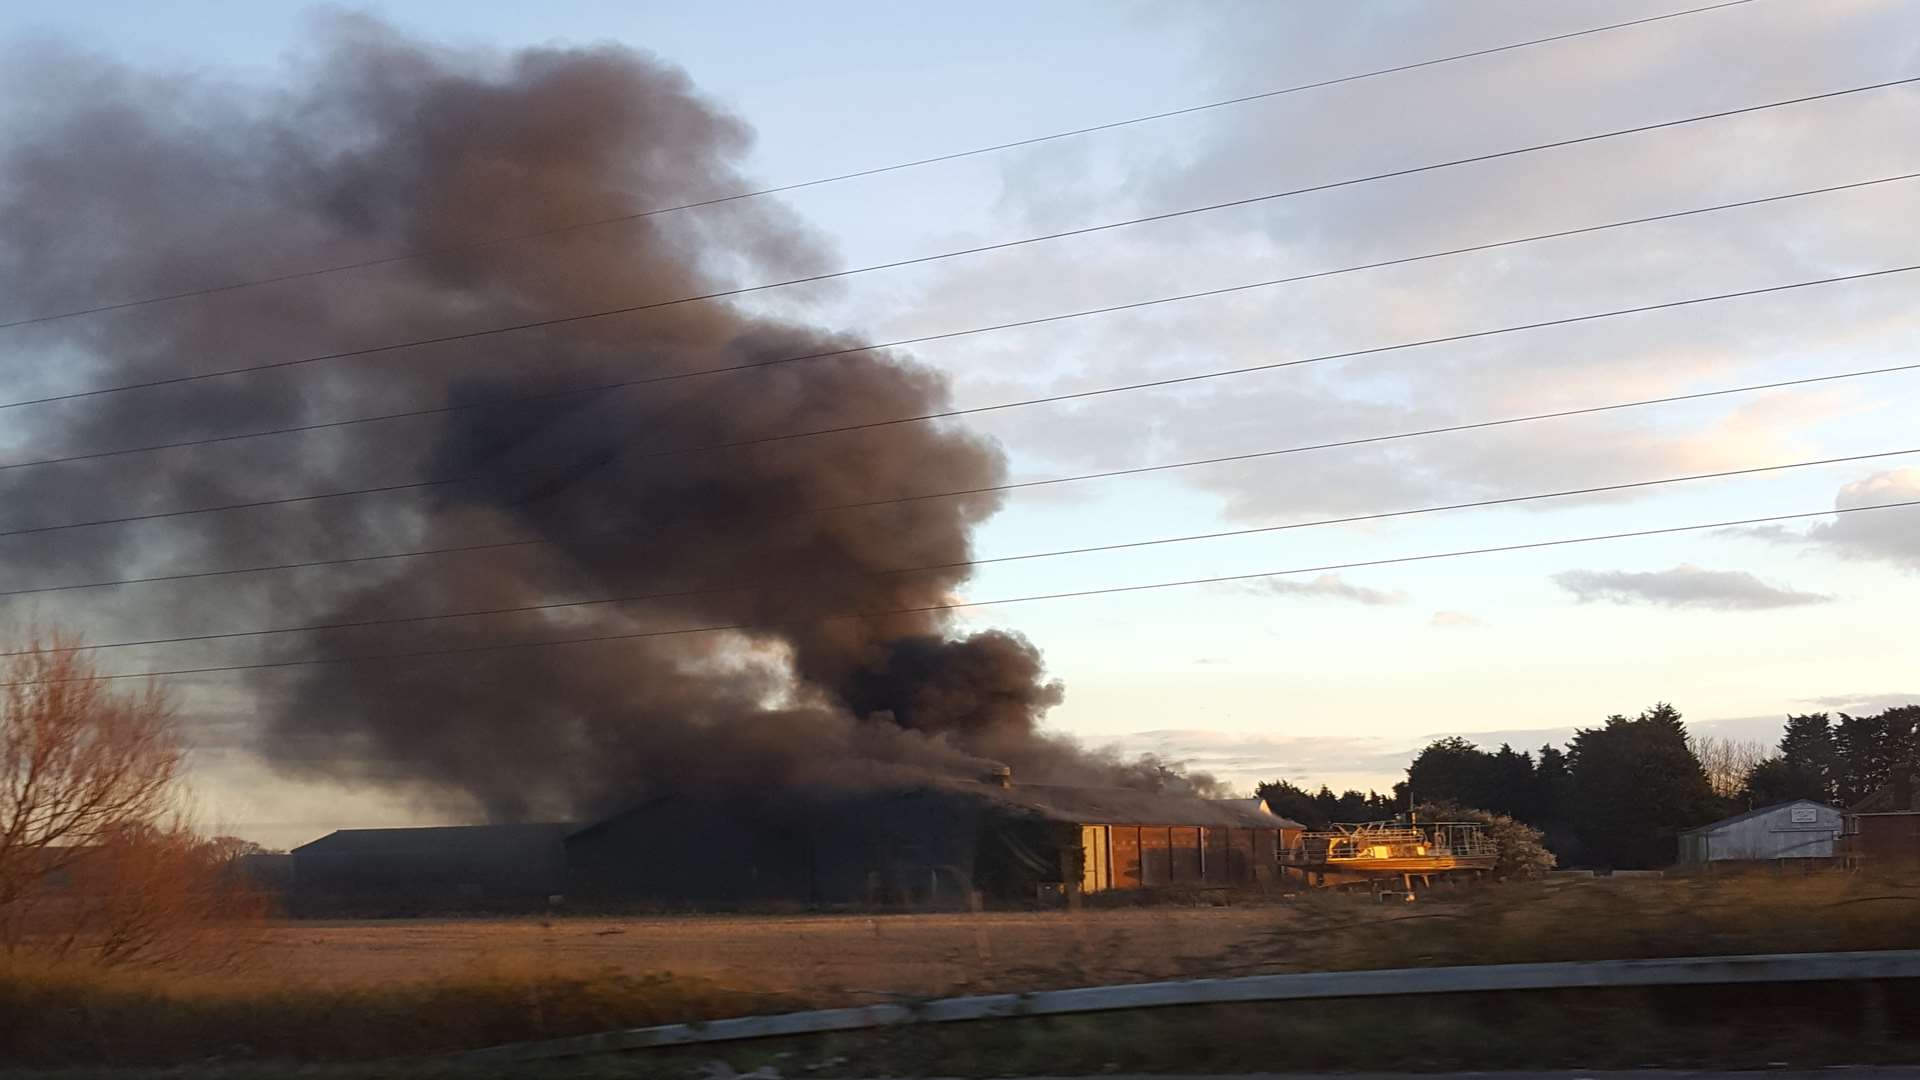 Smoke from the burning barn. Pictures: Matt Ramsden and Poppy Jeffery